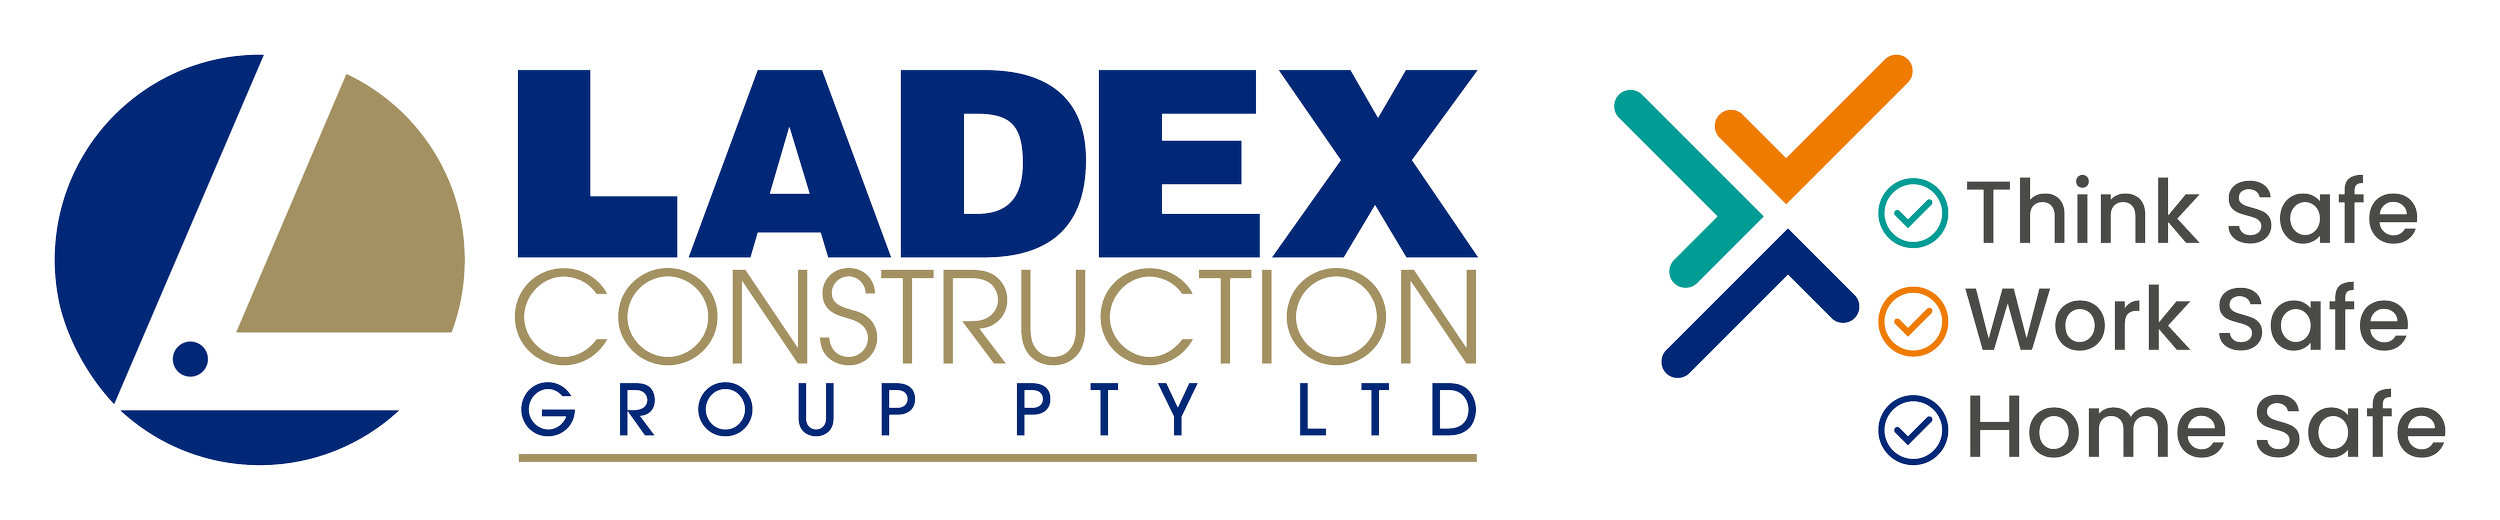 Ladex Construction Group Pty Ltd